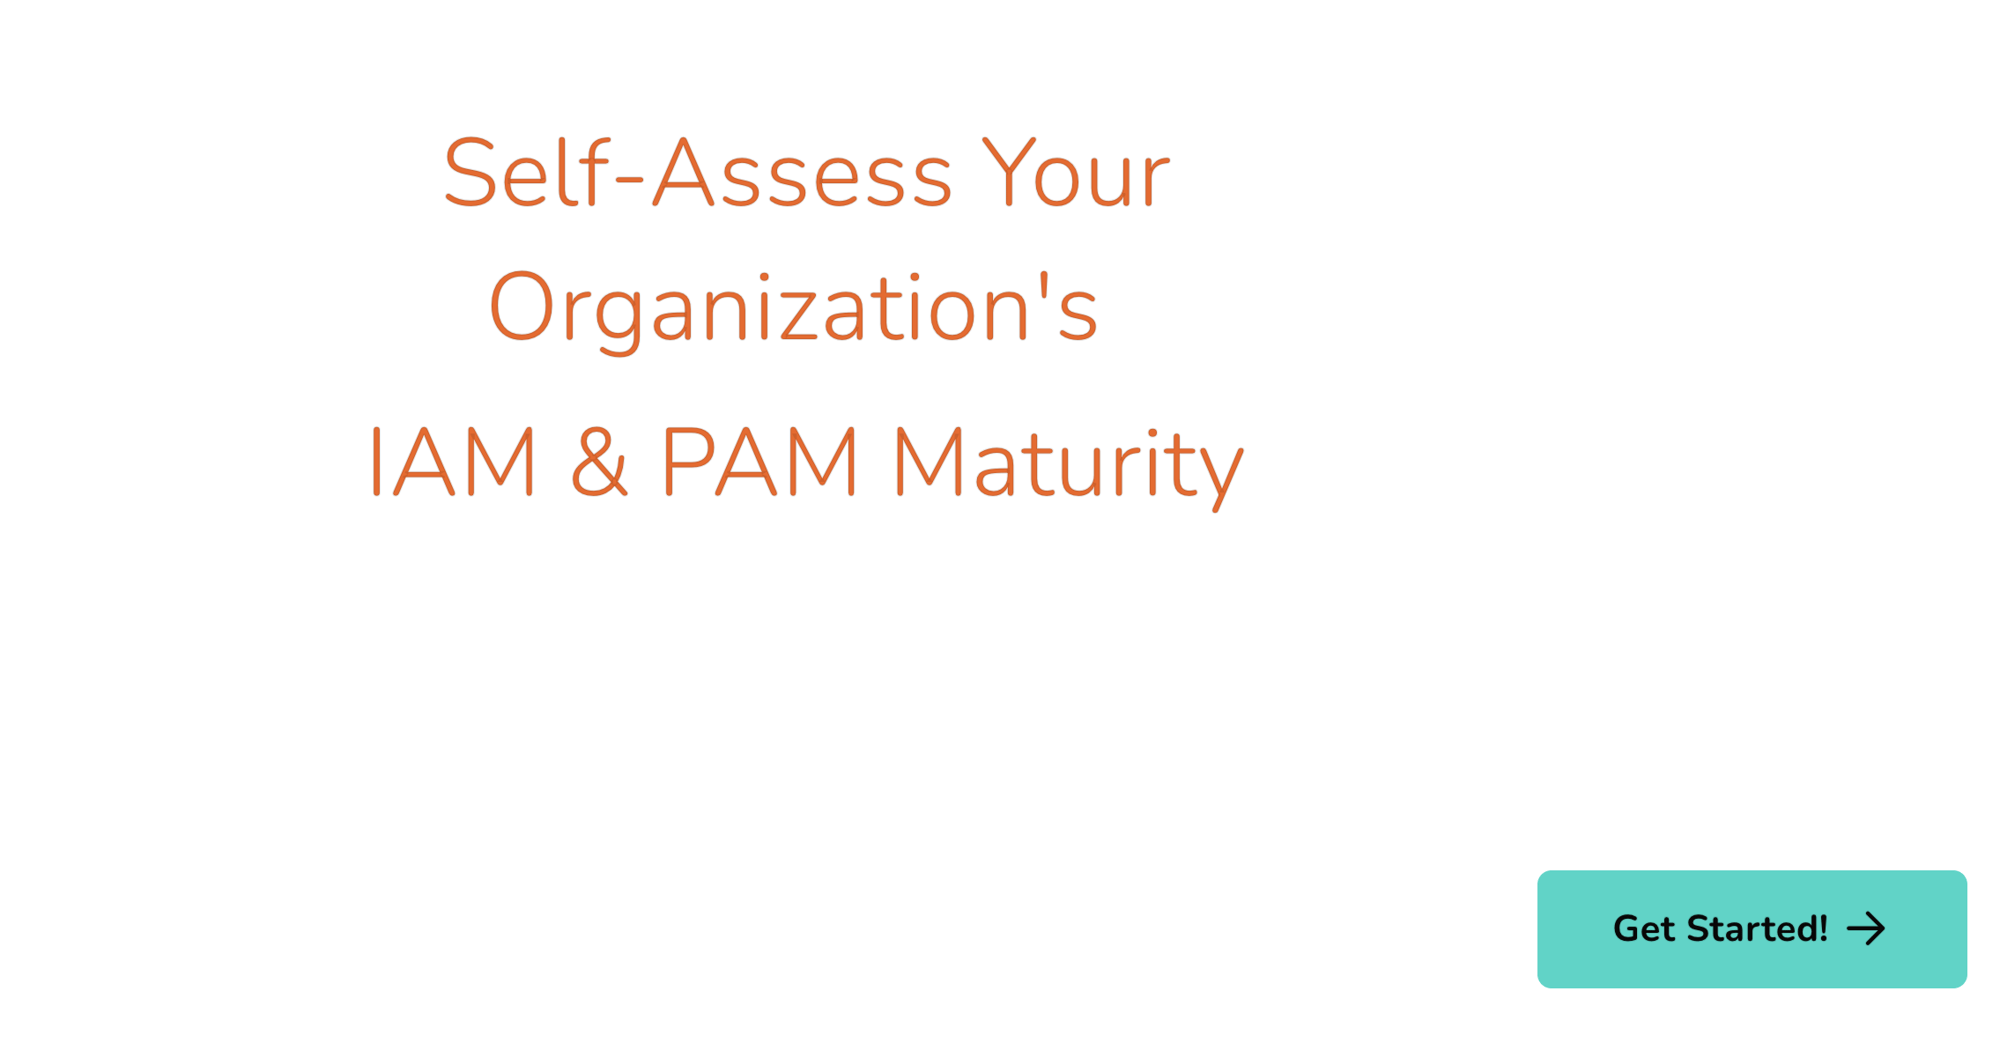 Self-Assess Your Organization's IAM & PAM Maturity